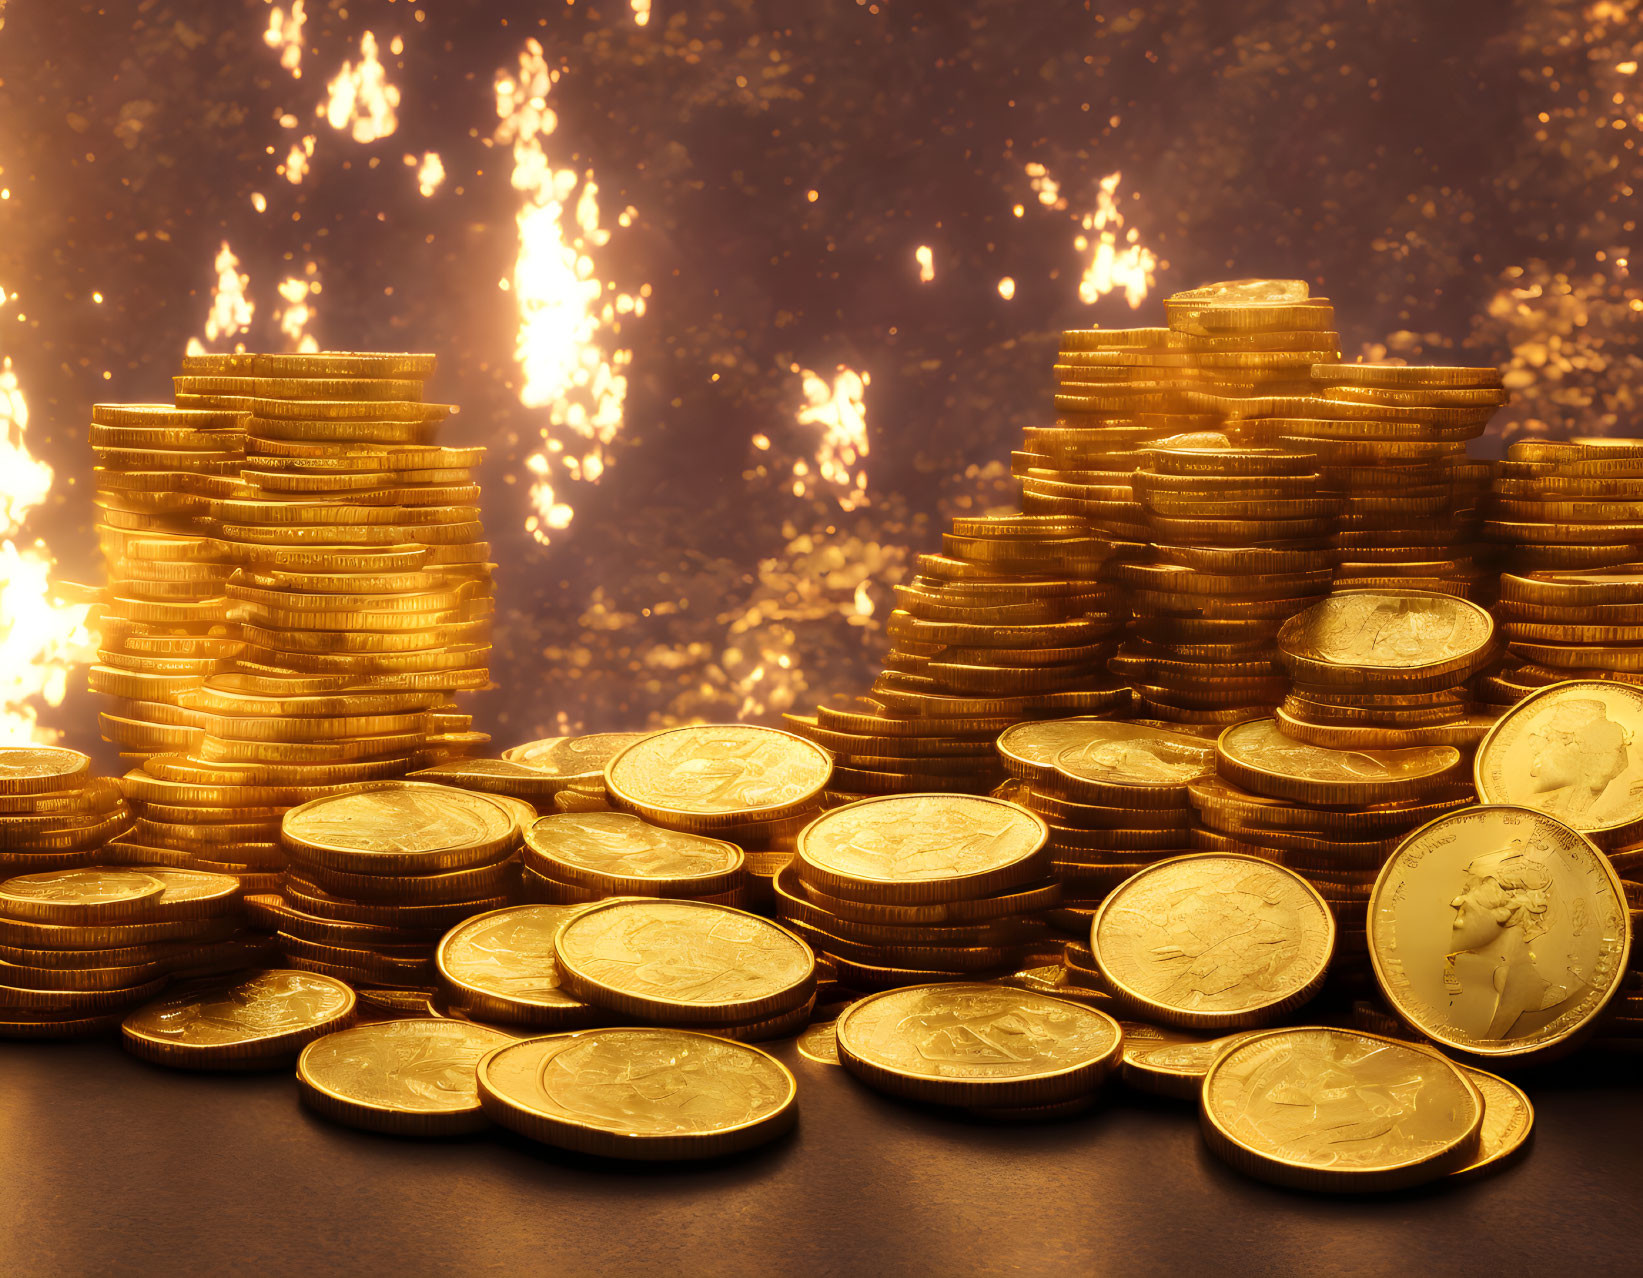 Shiny gold coins on glittery background symbolizing wealth